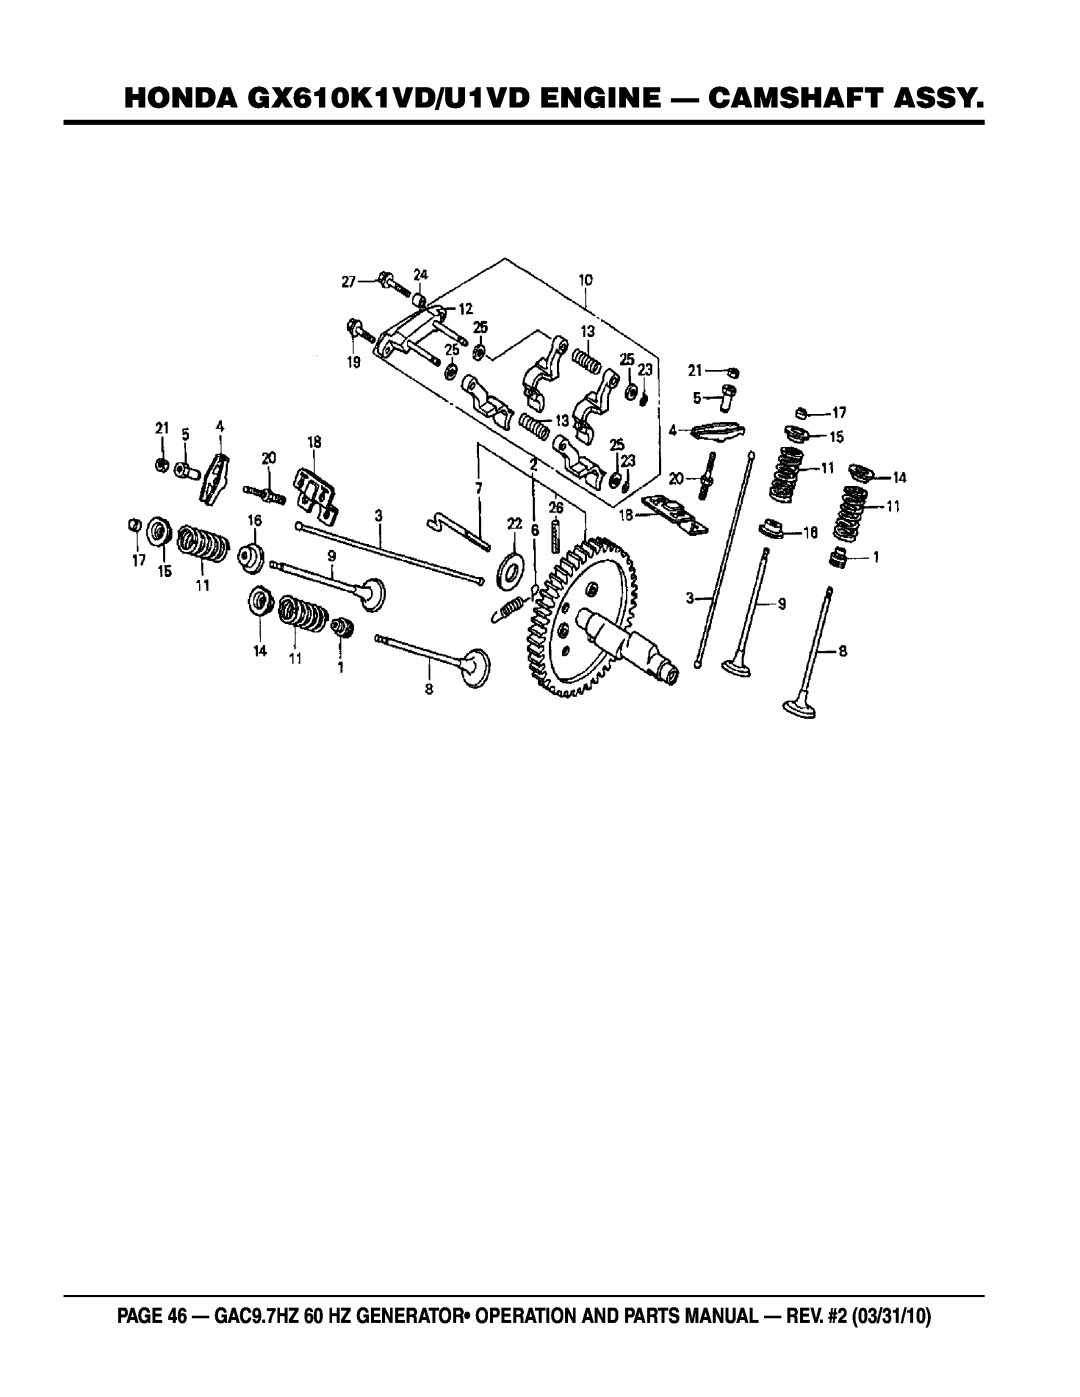 Multiquip GAC-9.7HZ manual HONDA GX610K1VD/U1VD ENGINE - CAMSHAFT ASSY 